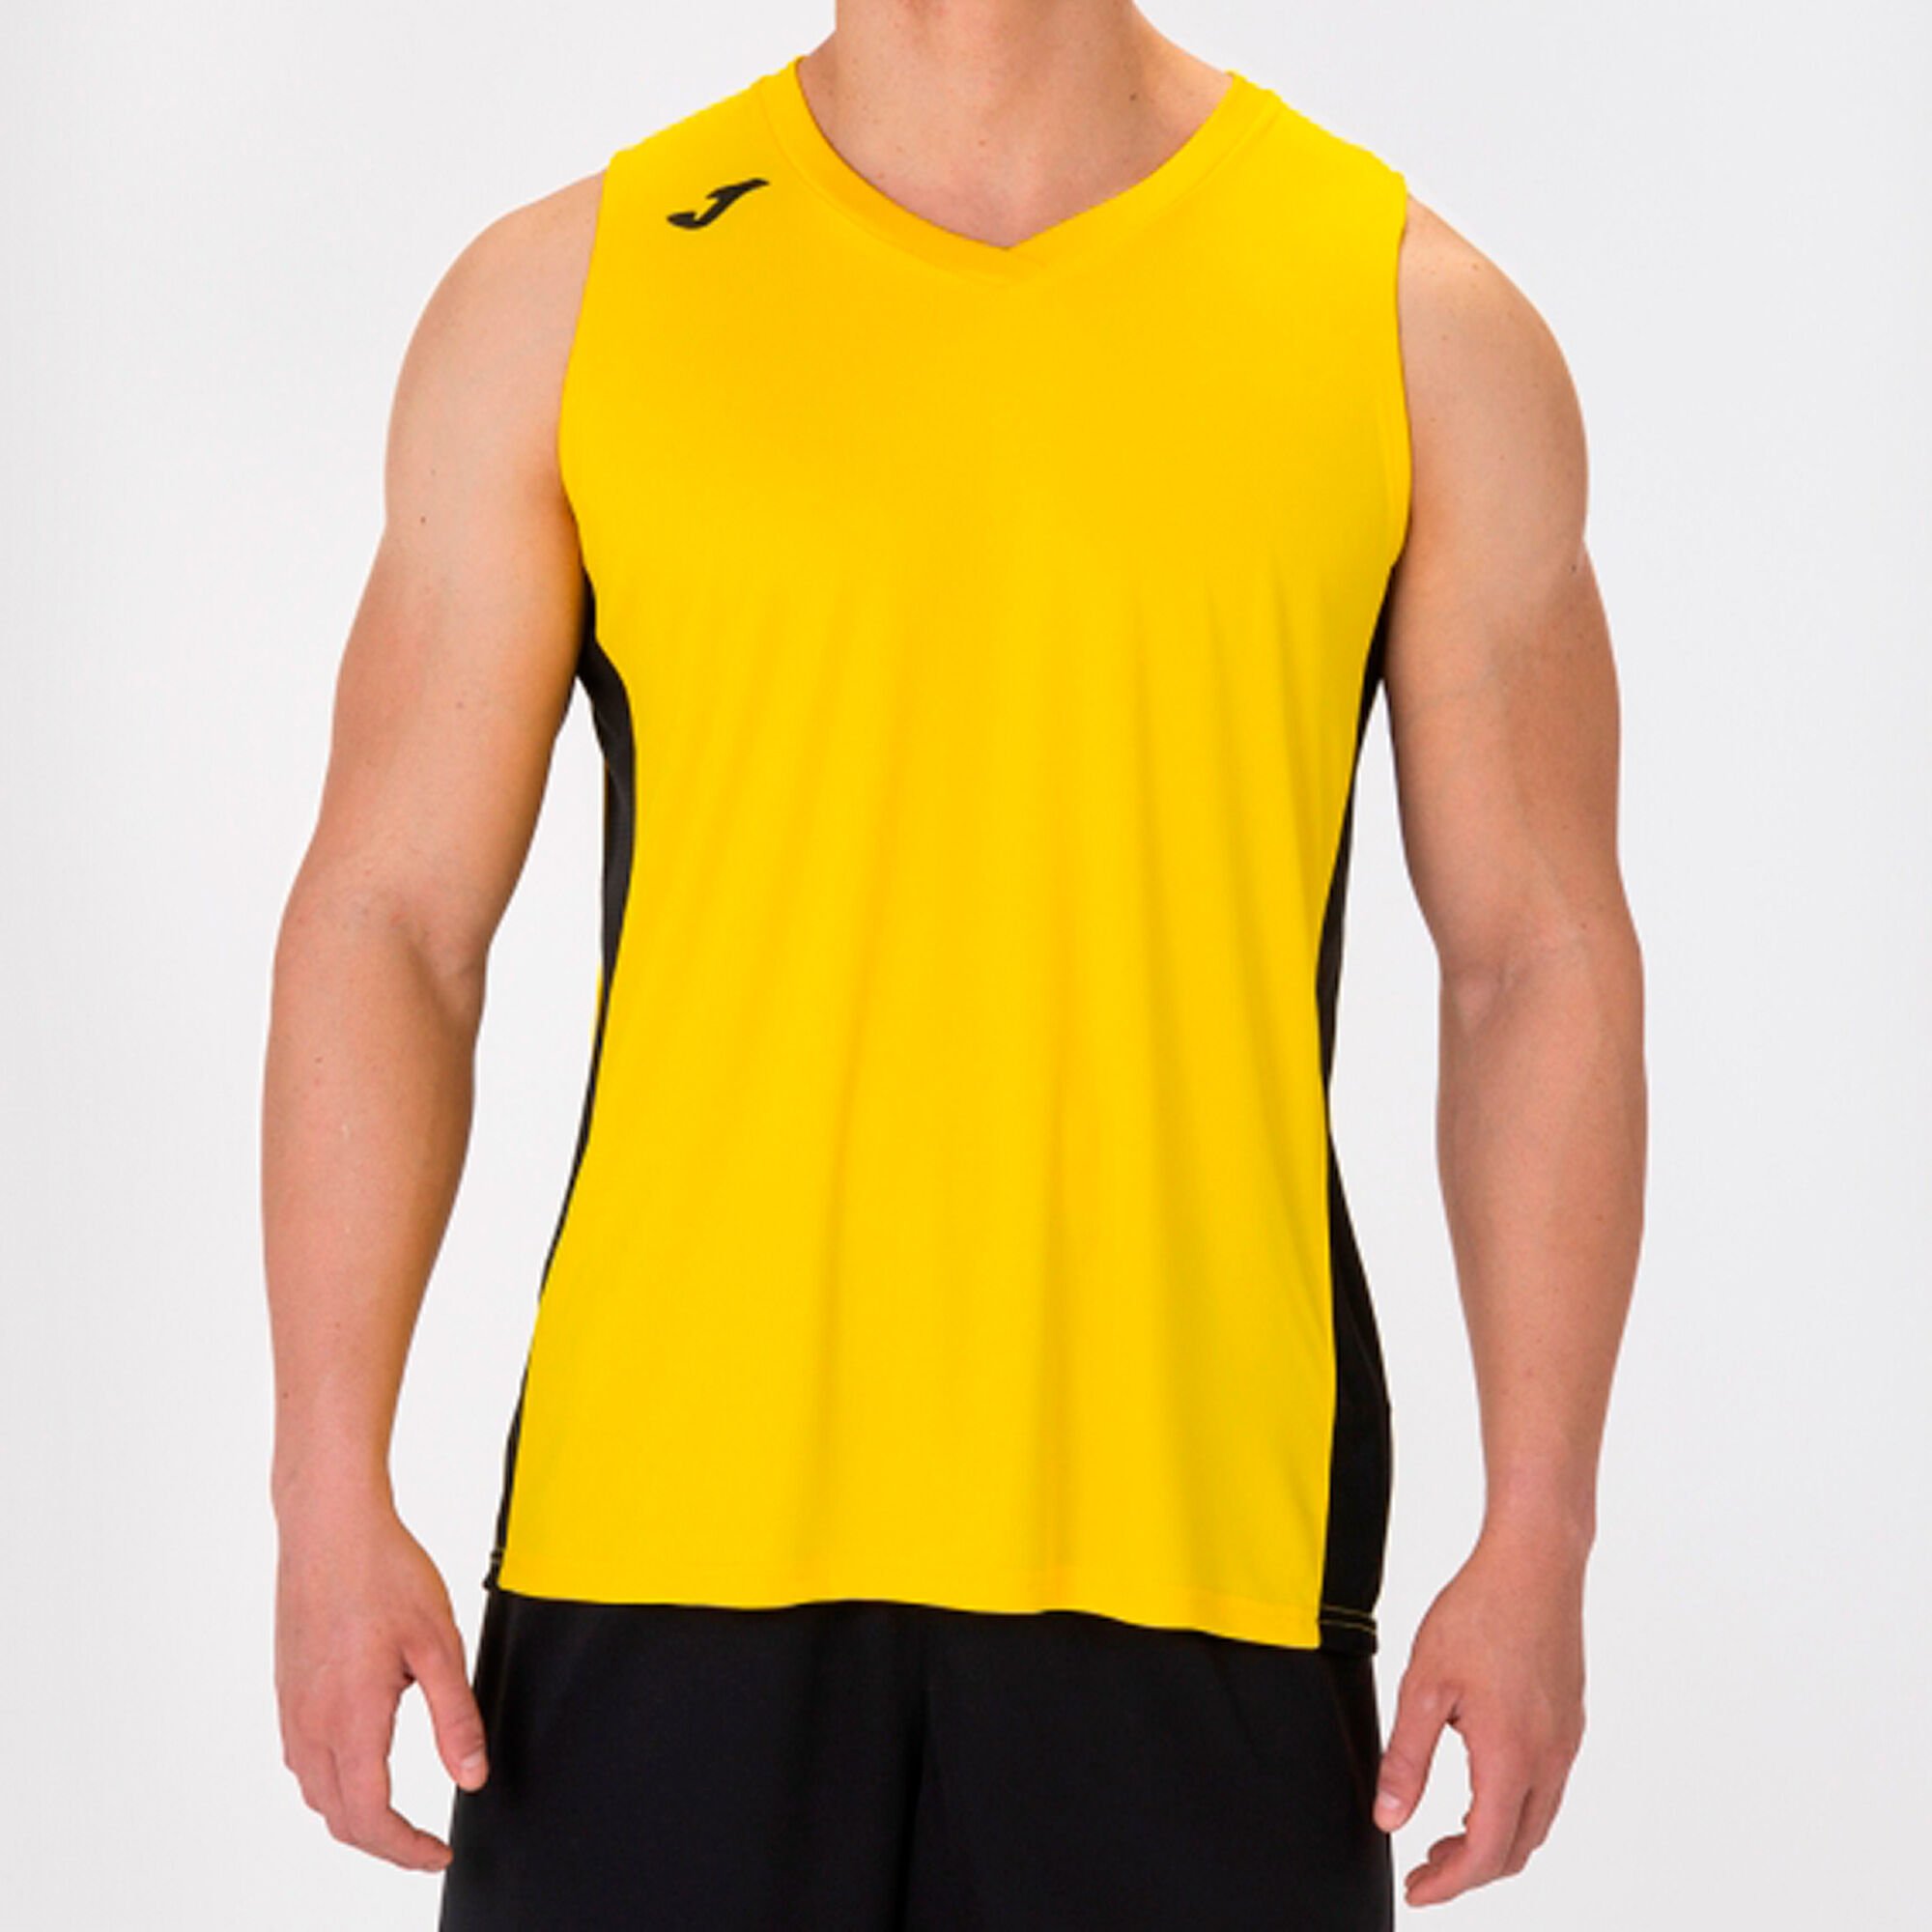 Shirt s/m mann Cancha III gelb schwarz